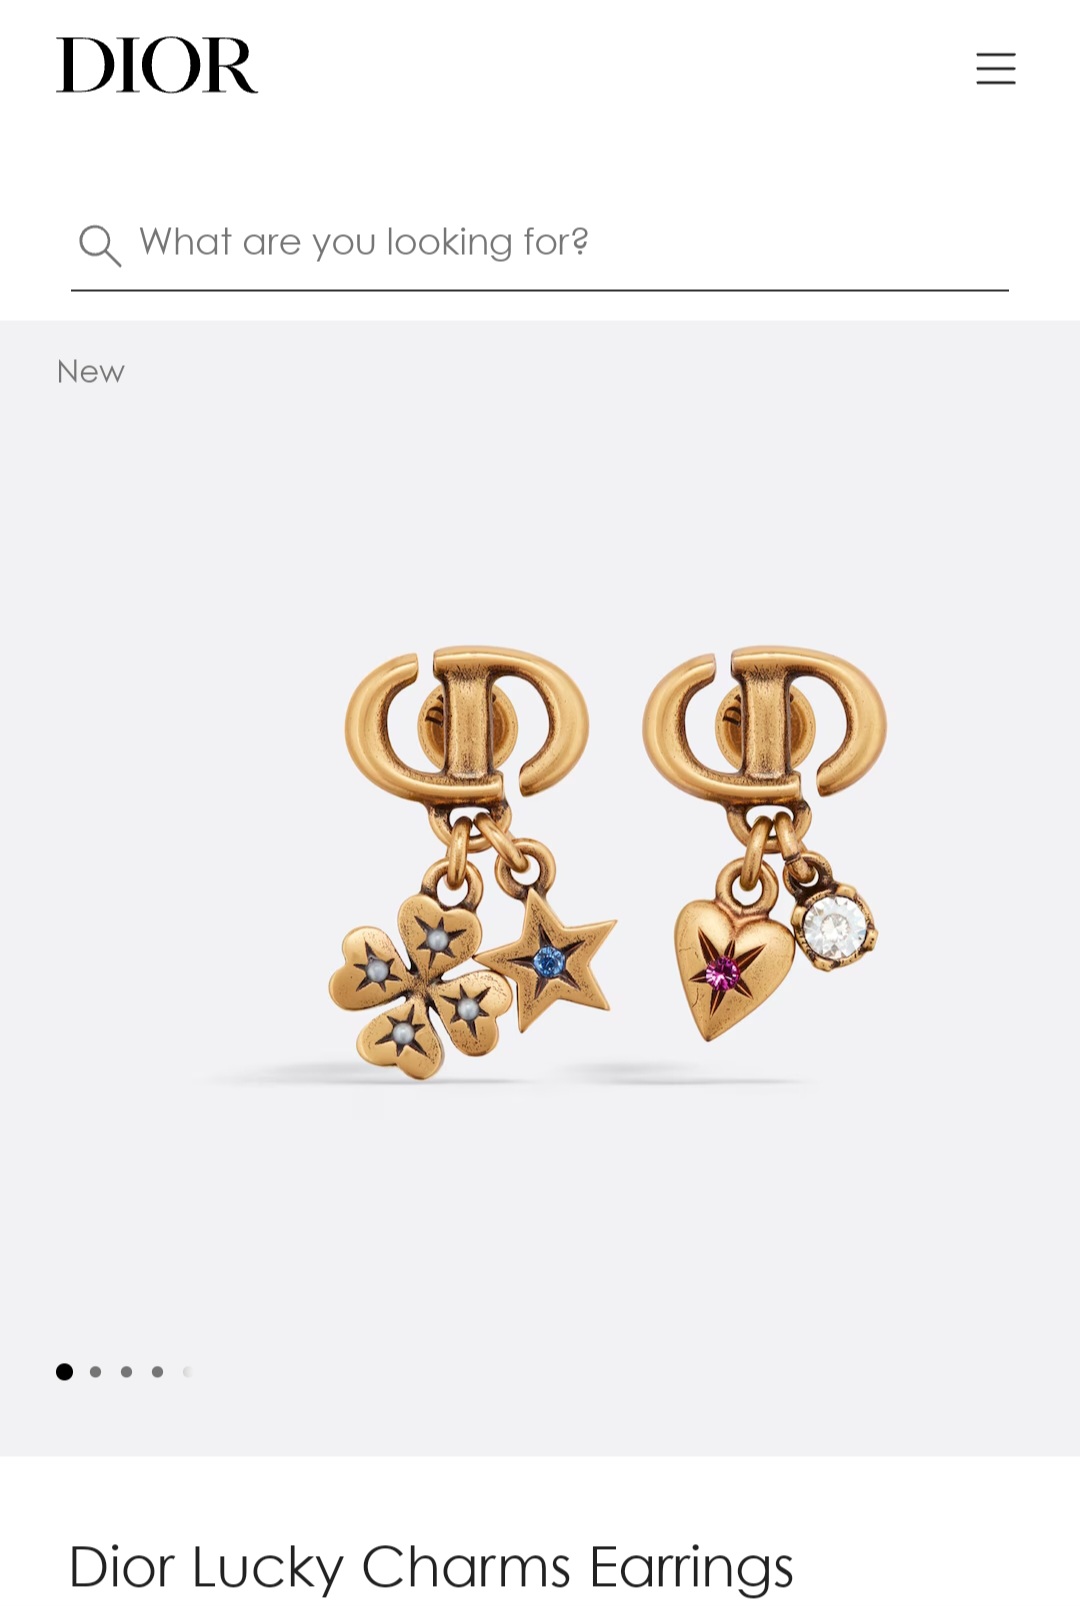 Dior Lucky Charms earrings